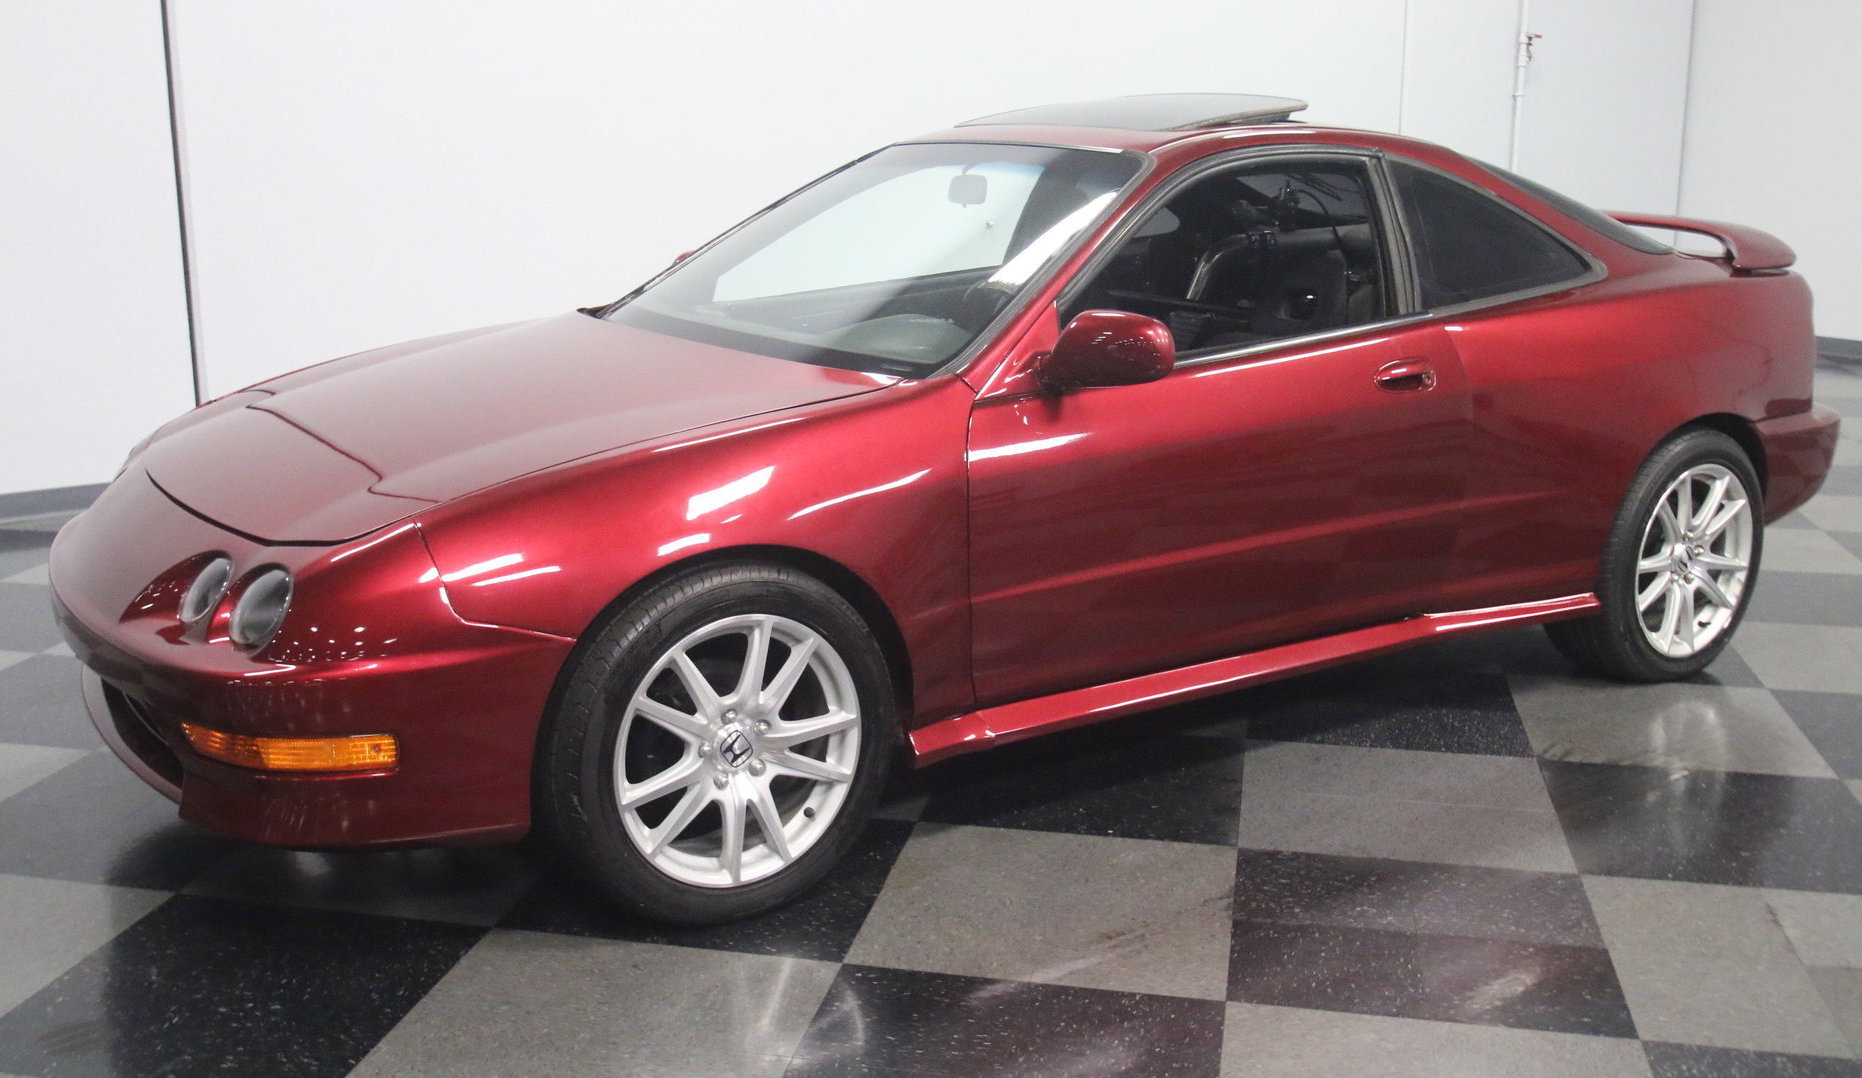 For Sale: 1999 Honda Integra with epic 8.2L V8 conversion